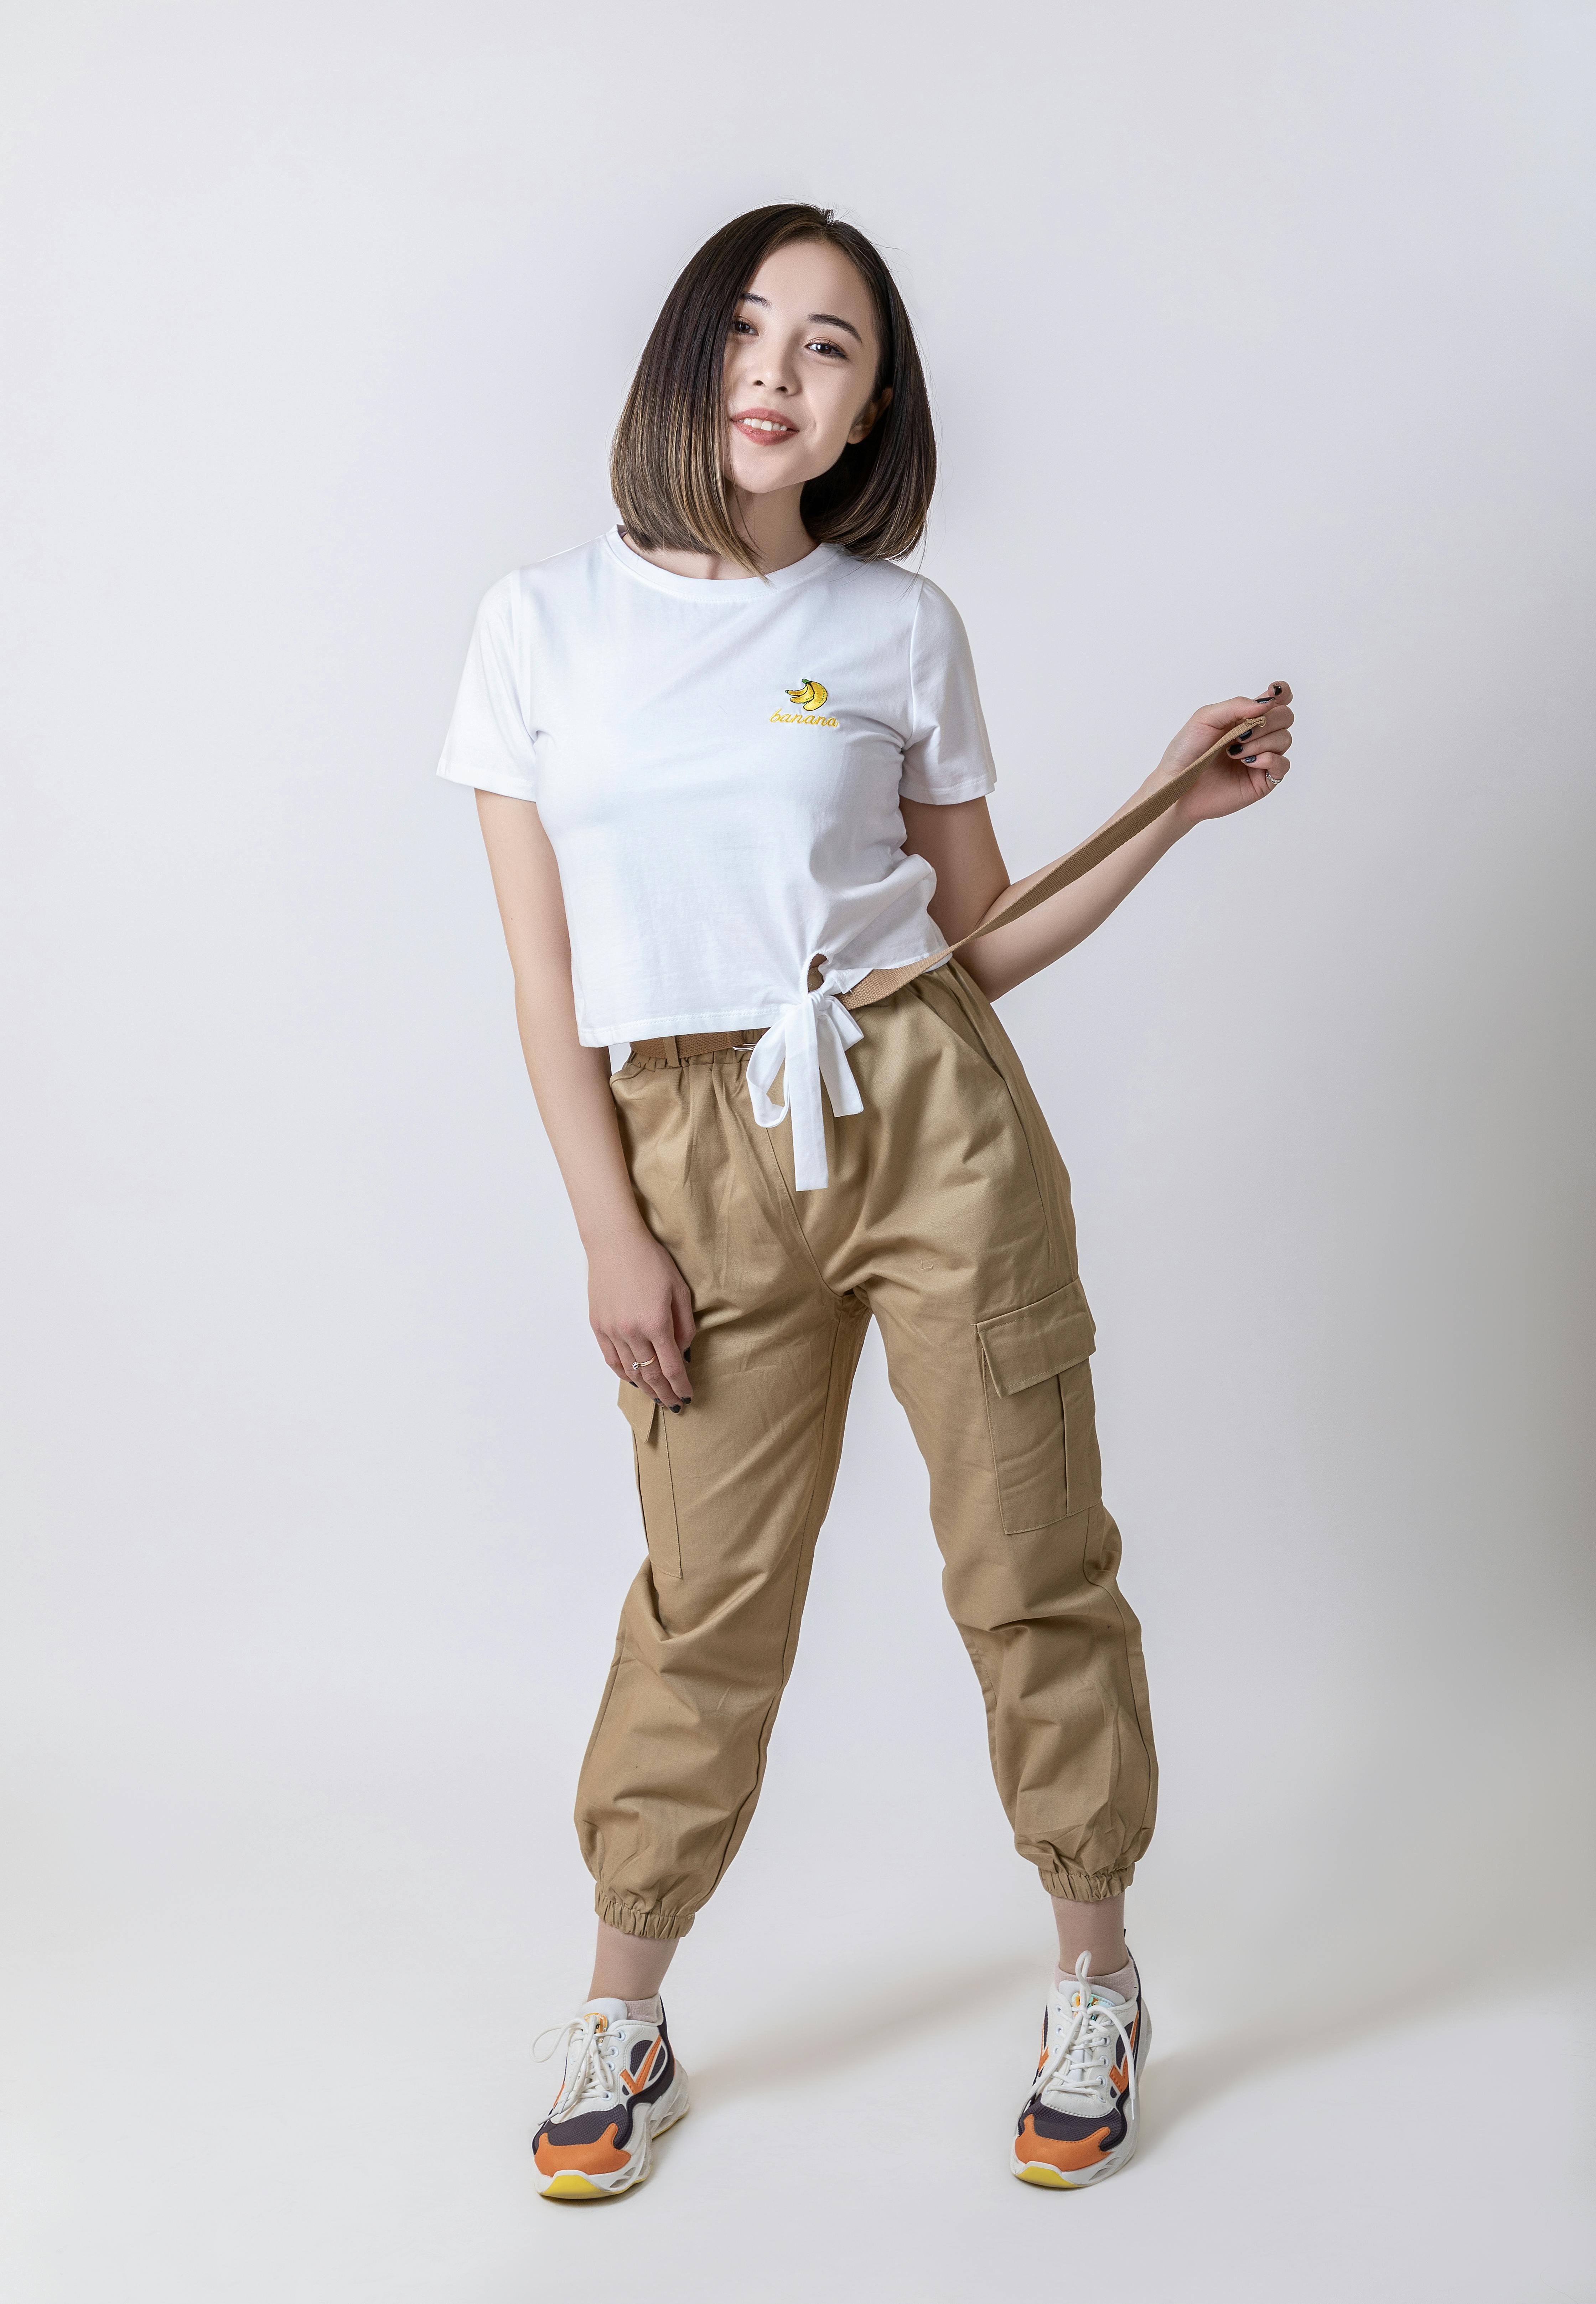 Girl Beige Cargo Pants Shirt Stock Photo by ©foxalexey 570297490